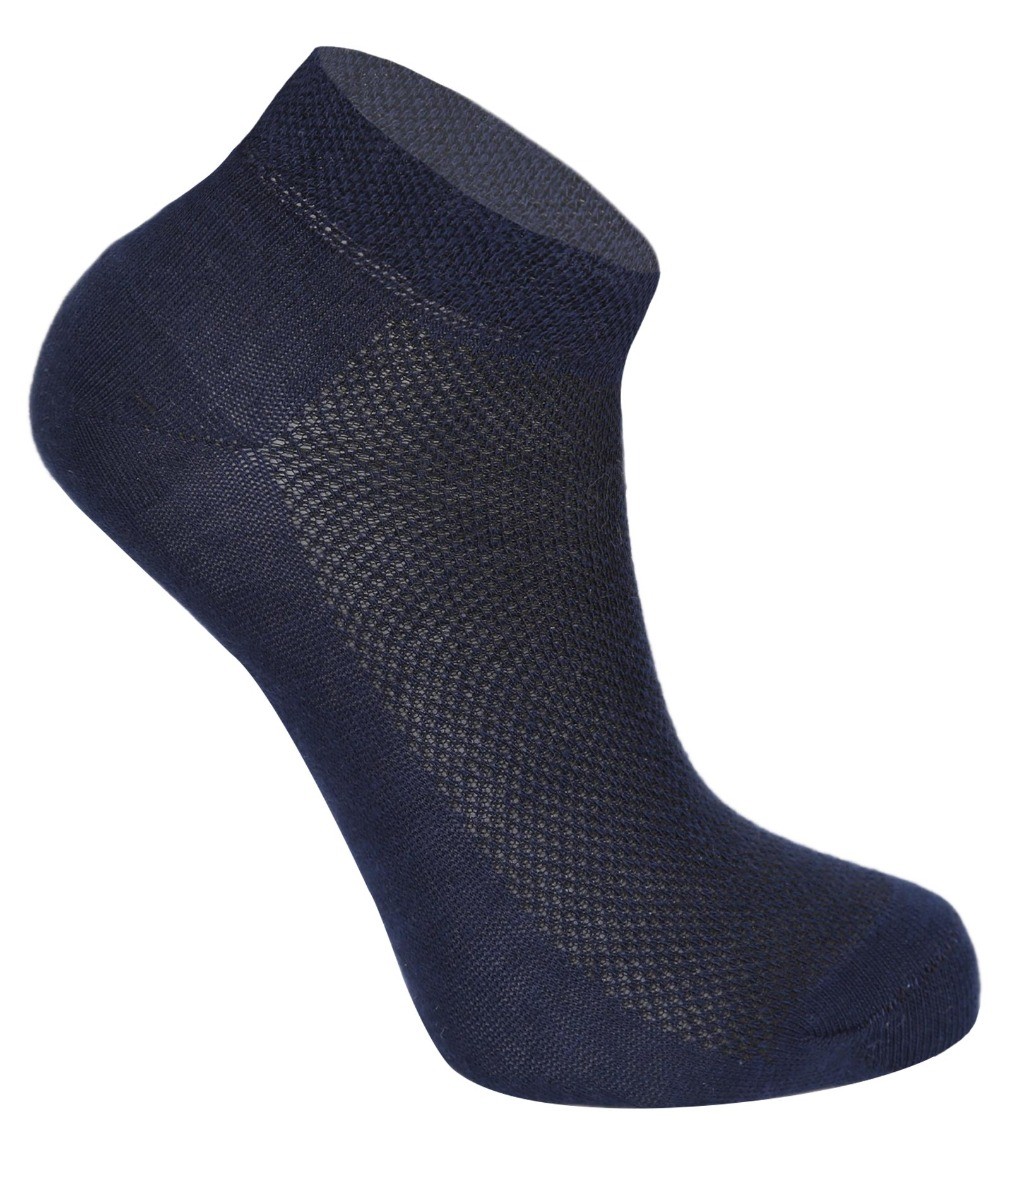 Unisex Stretch Cotton Ankle Socks, for Boys & Girls - Navy Blue